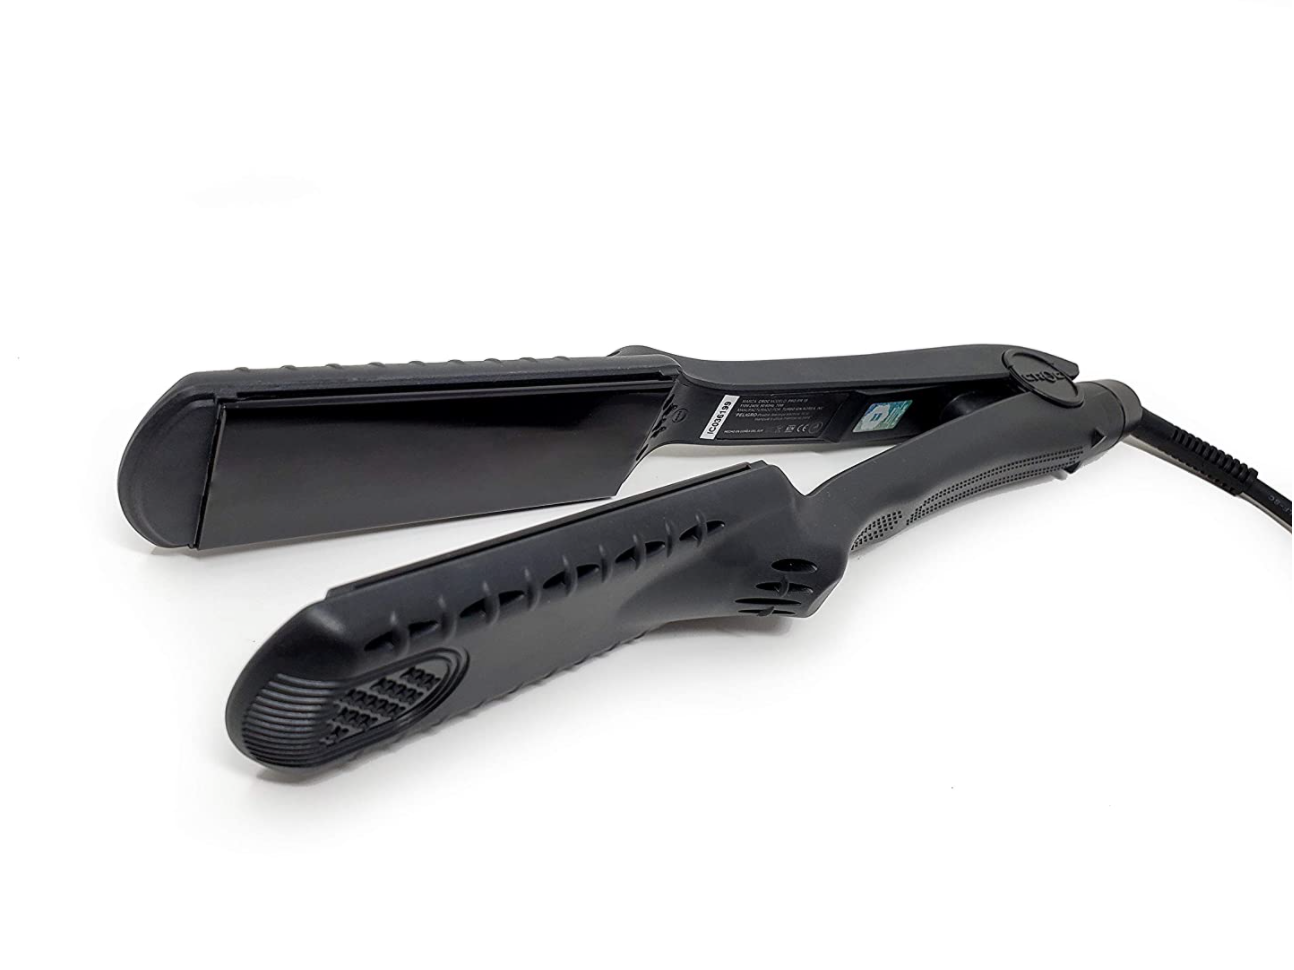 CROC New straightener Black Flat Iron Hair Straightener Ceramic Titanium Floating Plates Dual Voltage Heat Up 450℉